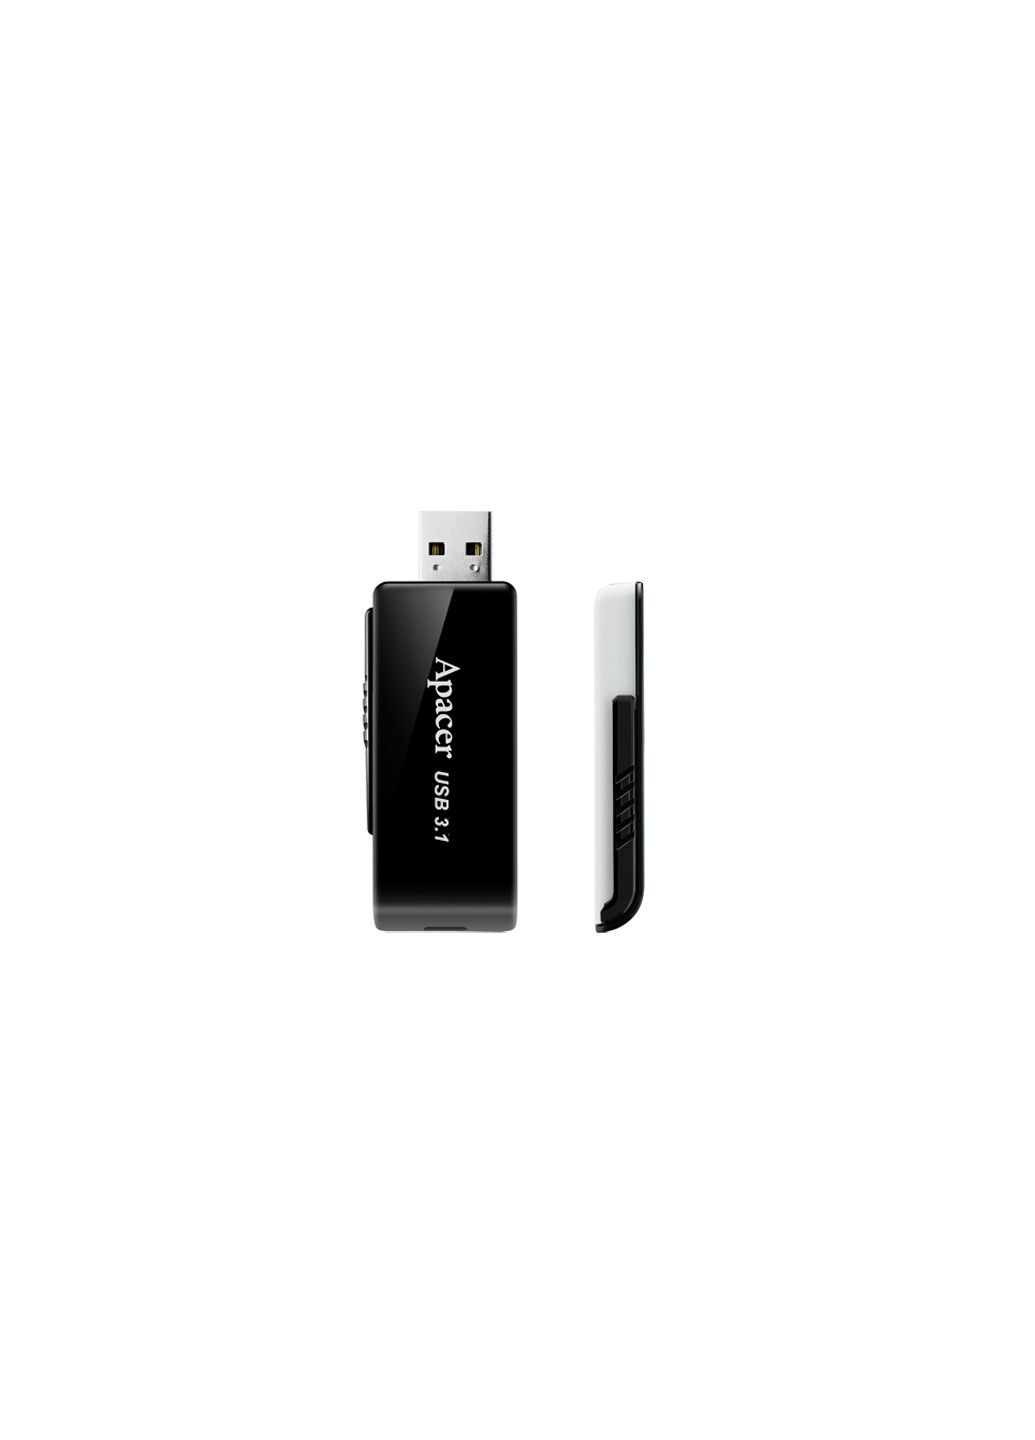 Flash Drive AH350 64GB (AP64GAH350B1) Black Apacer (278367809)